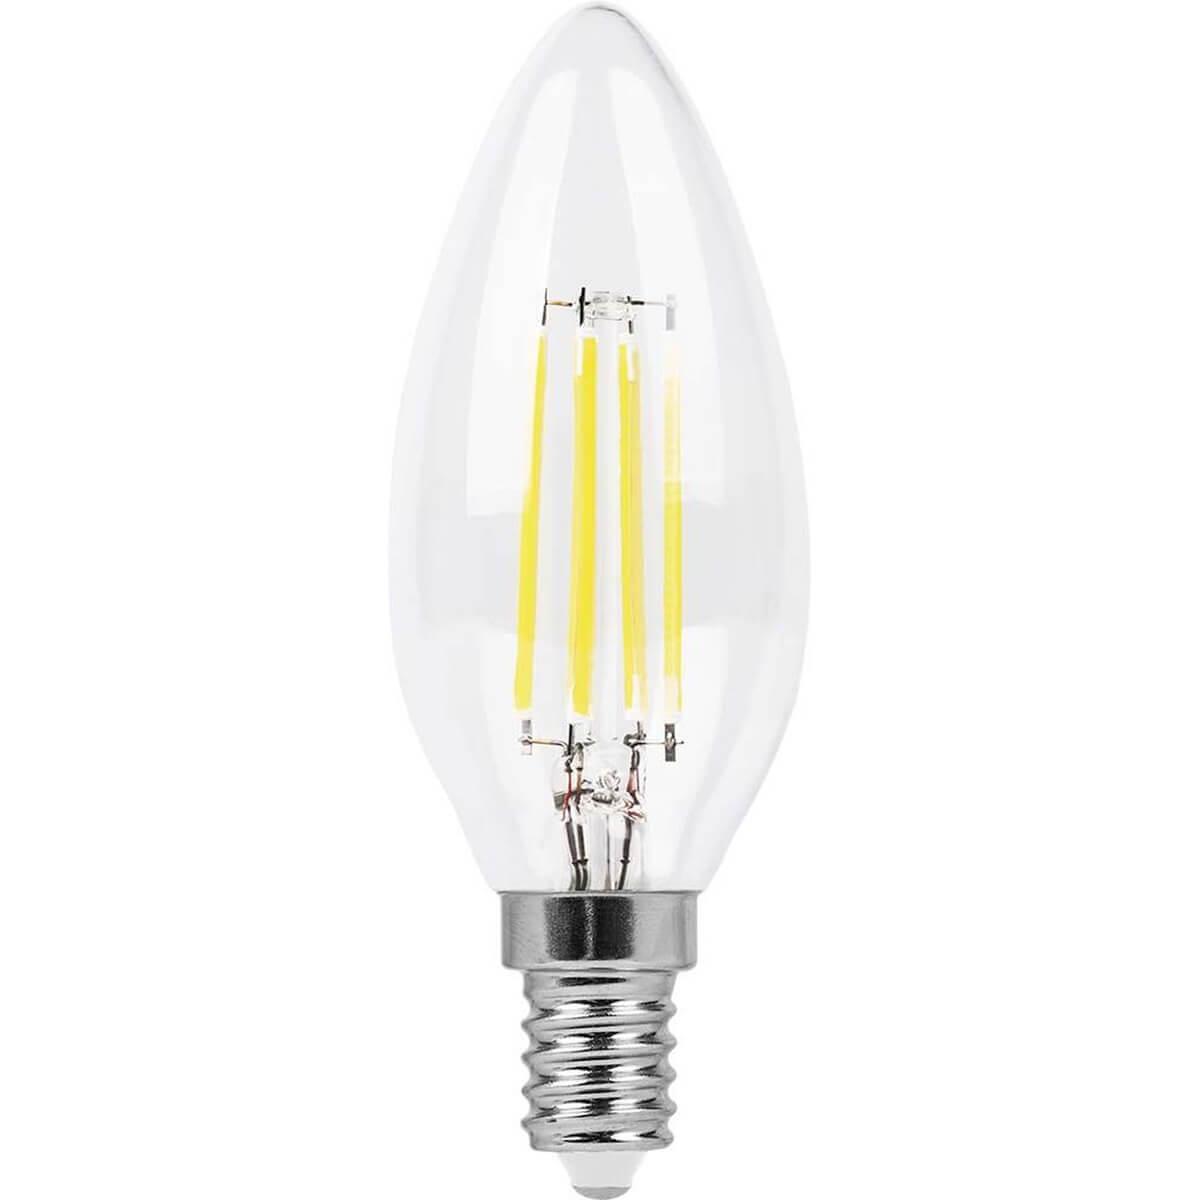 Лампа светодиодная филаментная Feron E14 11W 4000K Шар Прозрачная LB-511 38014